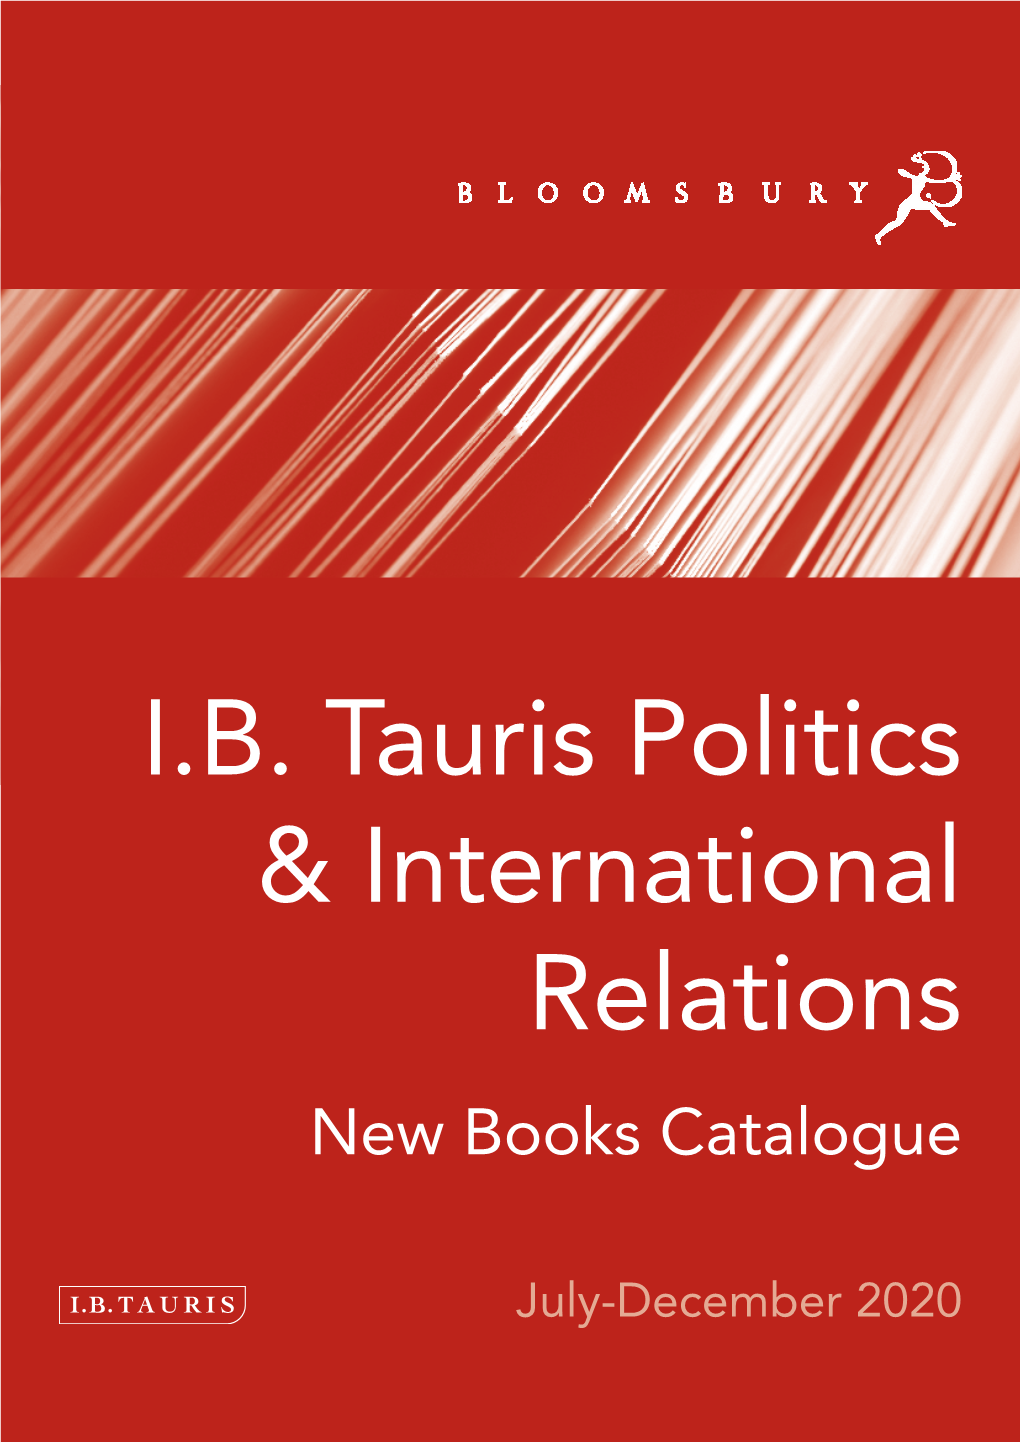 I.B. Tauris Politics & International Relations